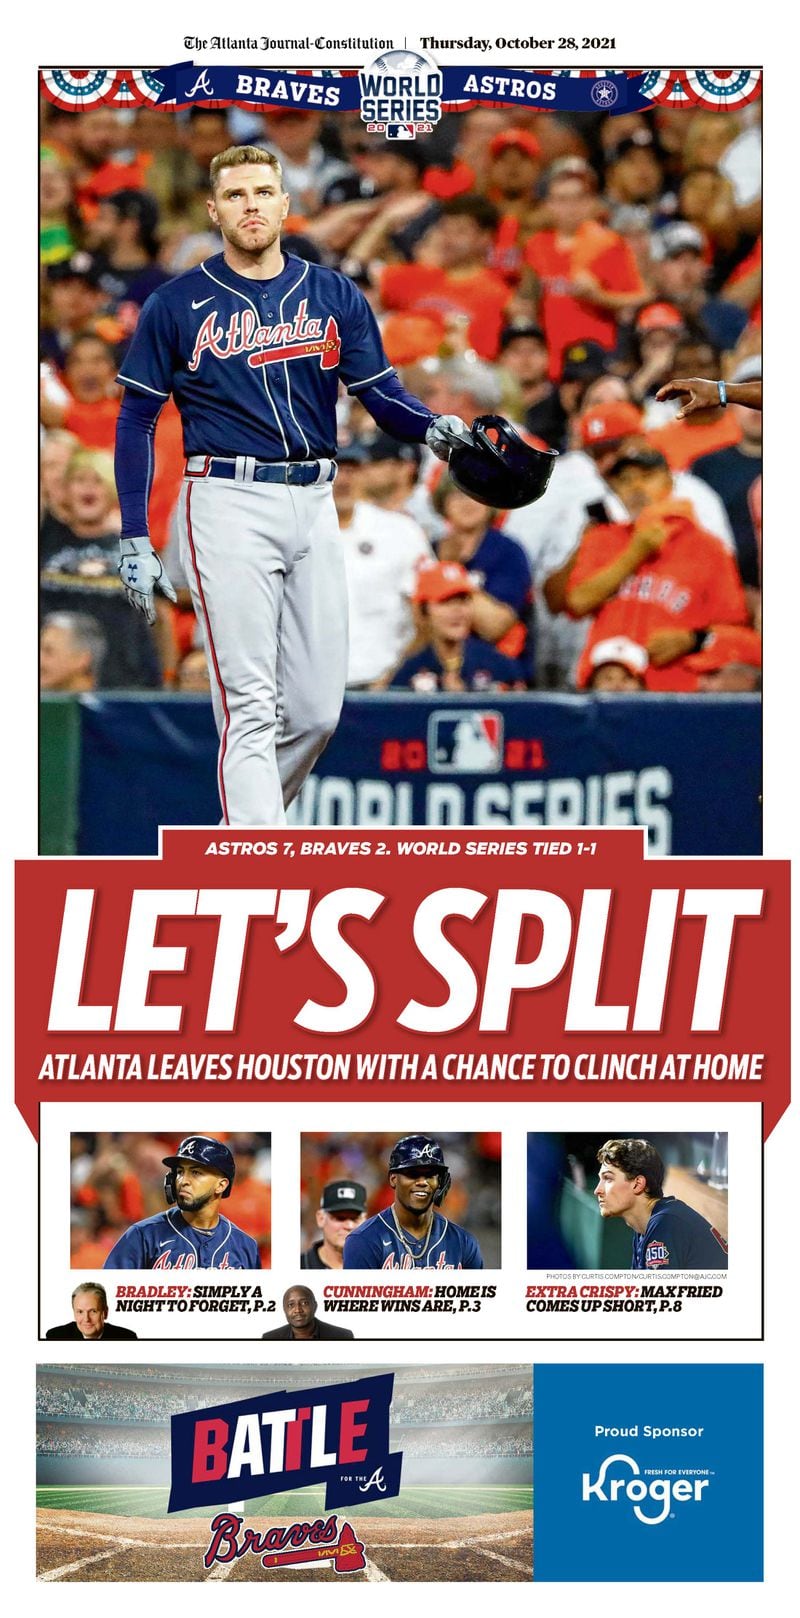 ‘Let’s Split’ – Atlanta Braves World Series section in today’s ePaper